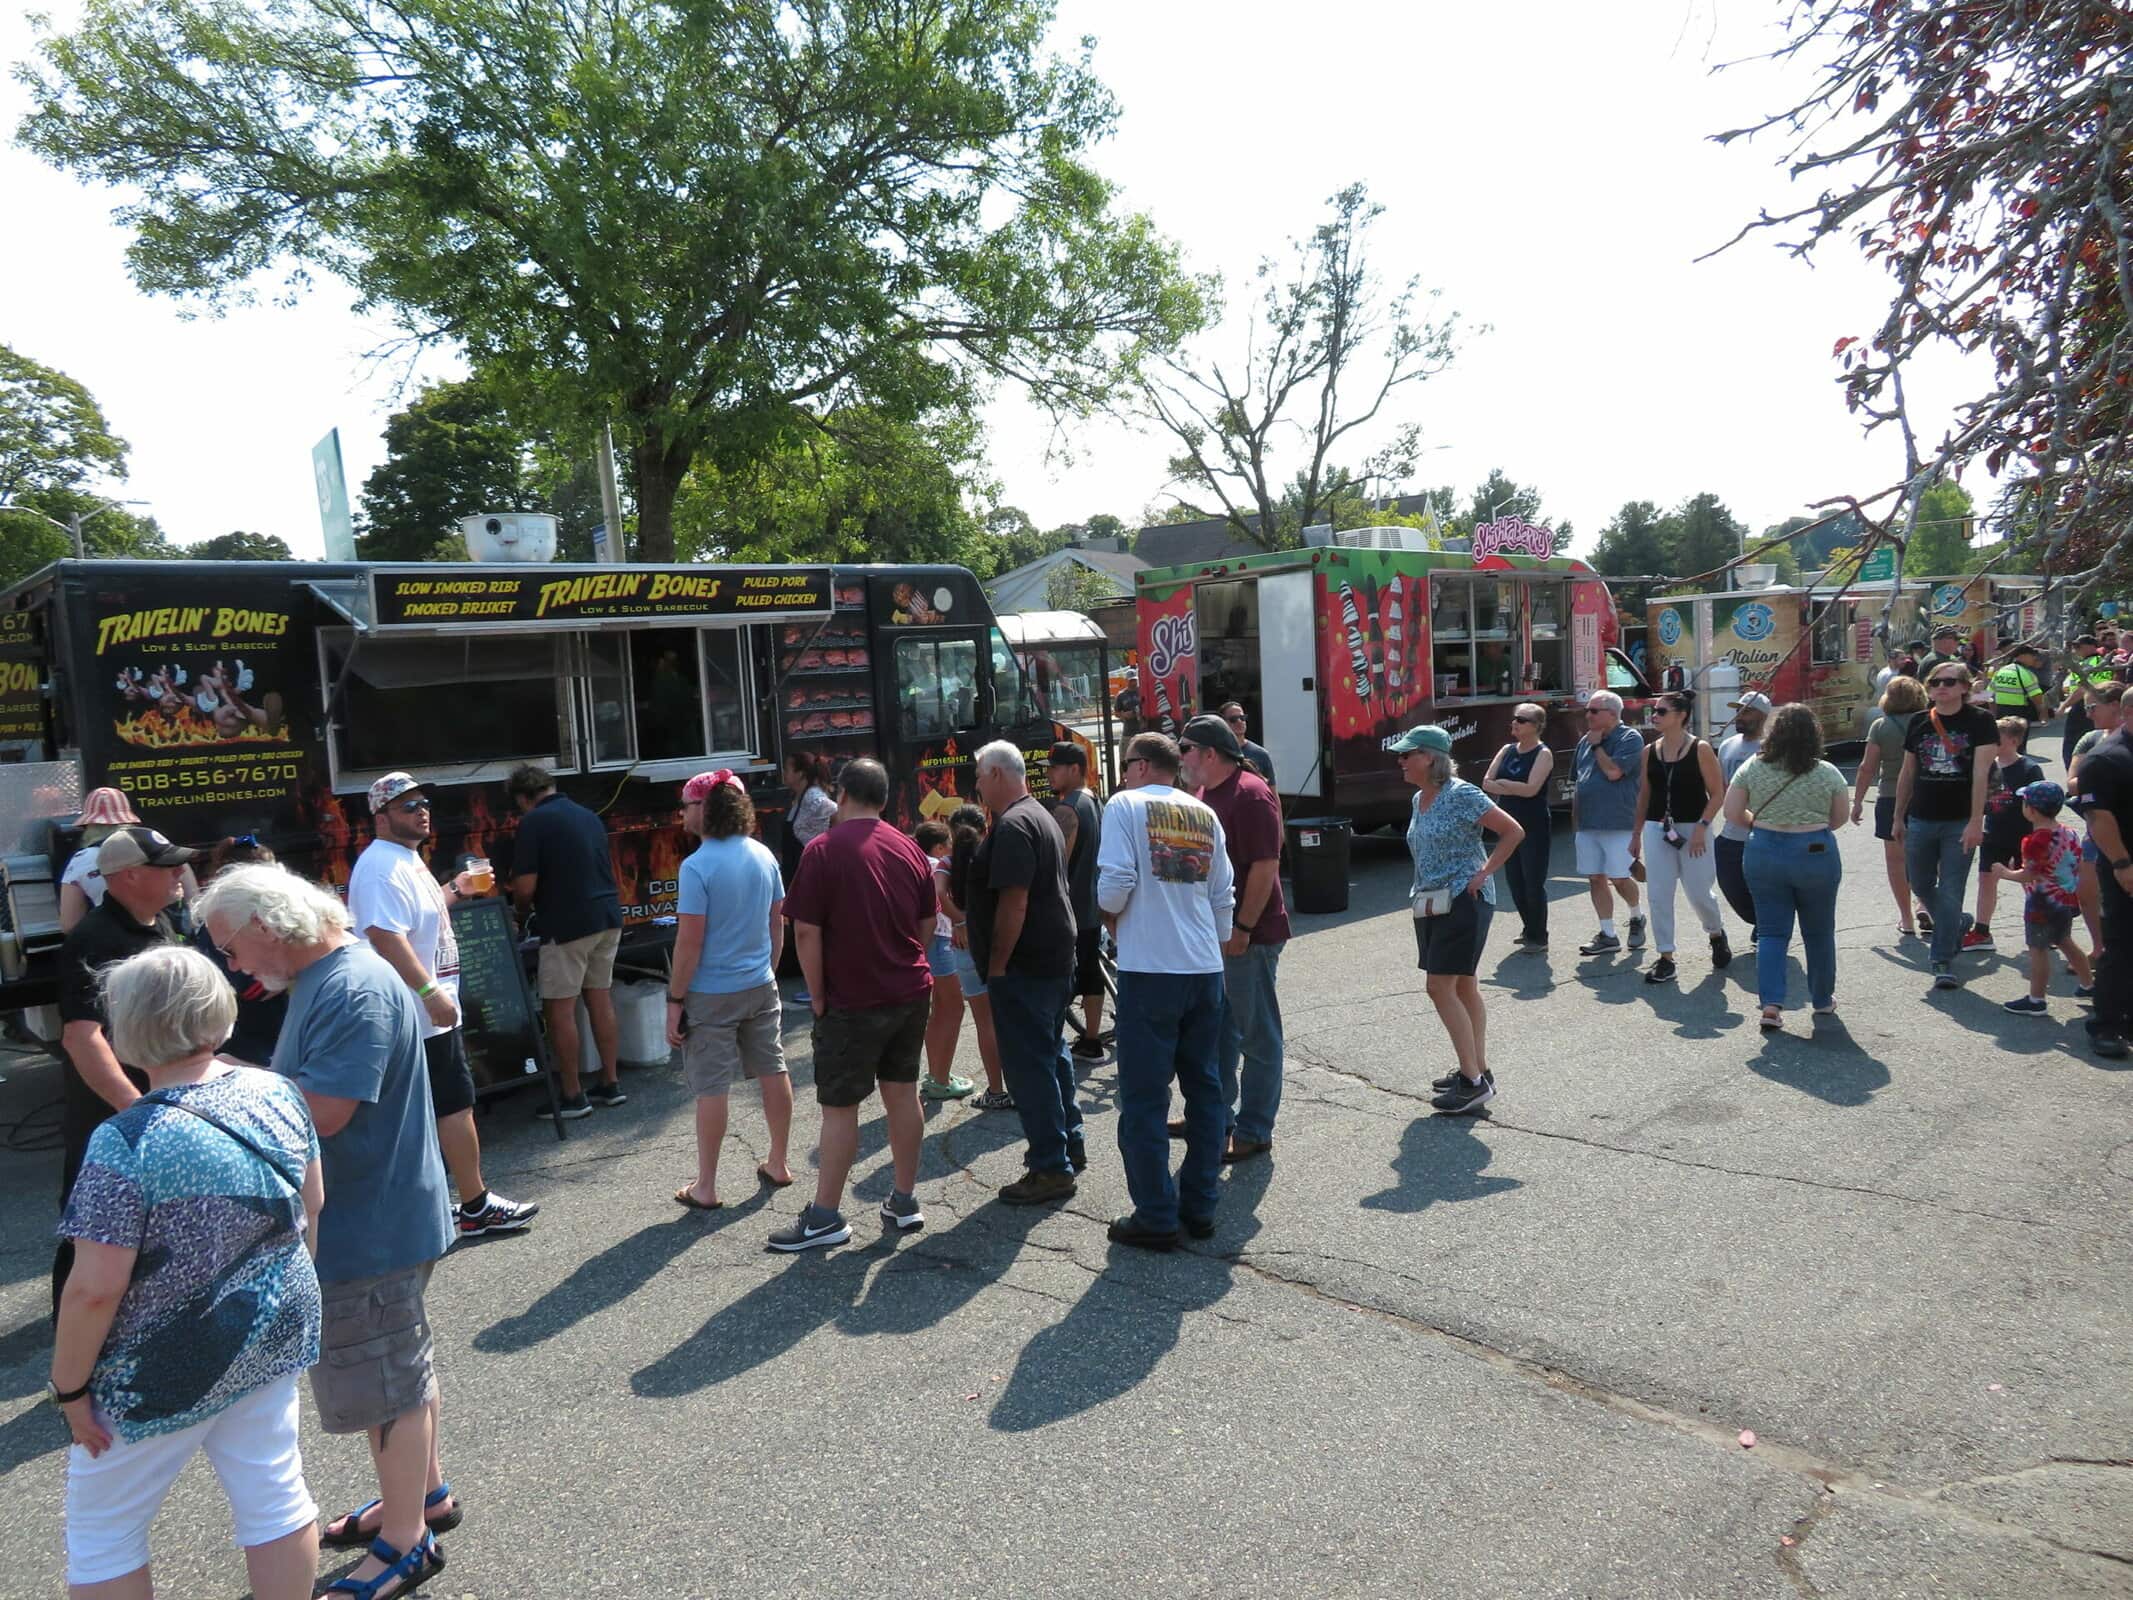 Marlborough Food Truck and Arts festival features good trucks, music